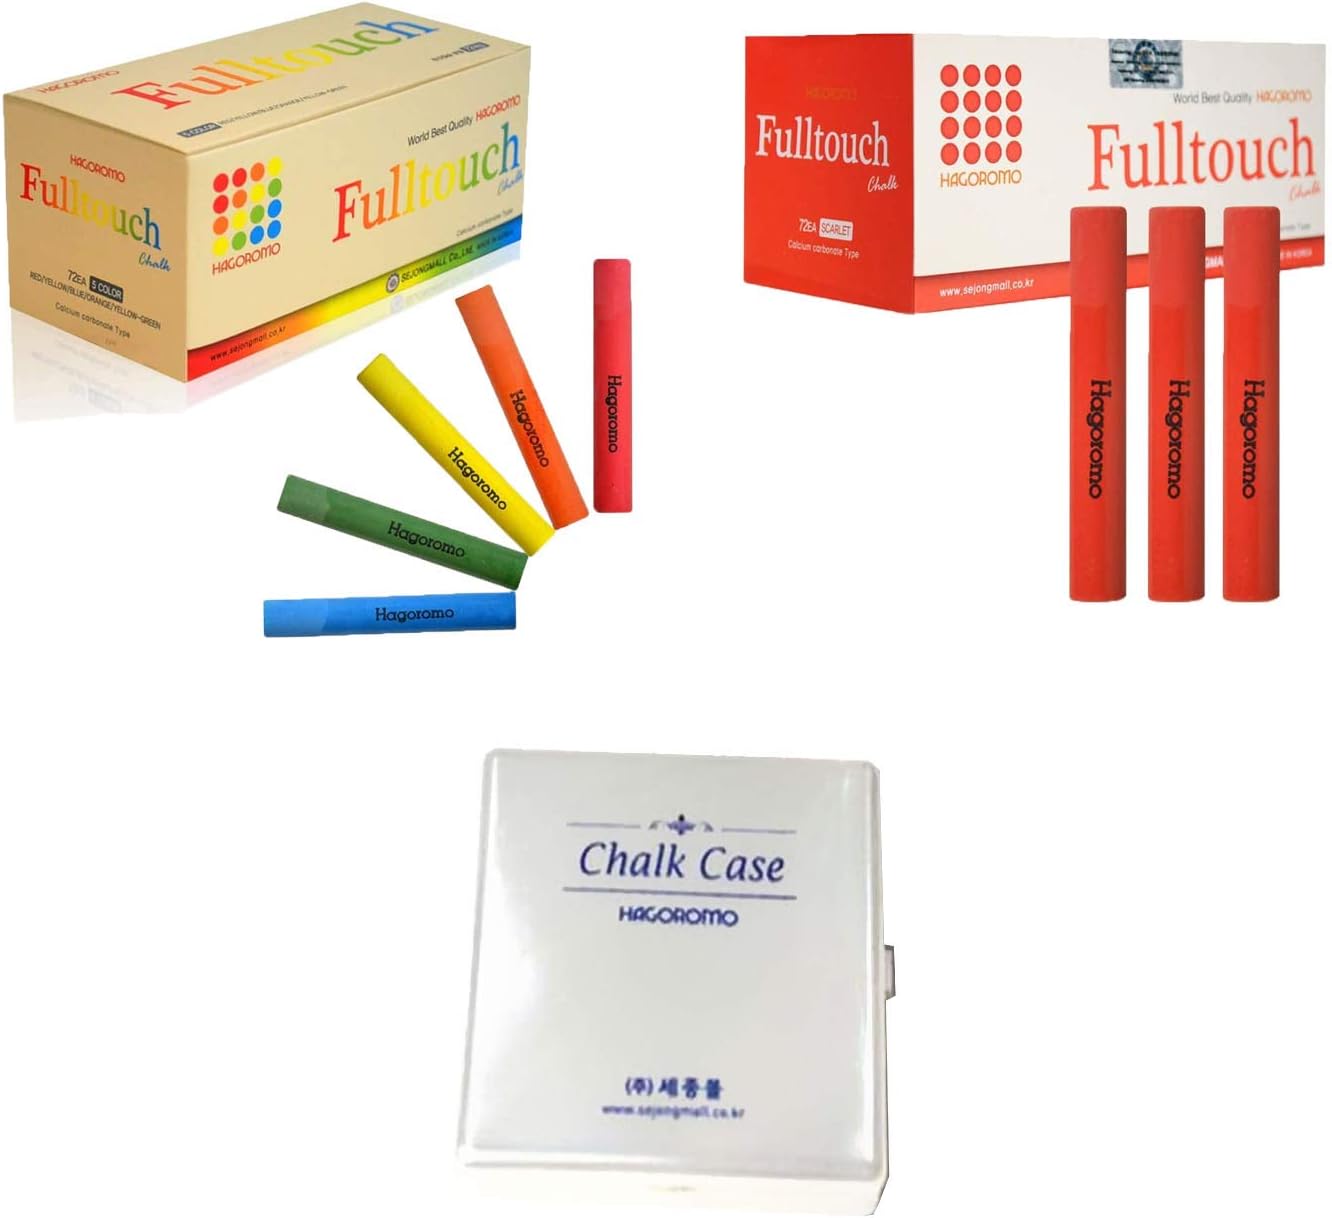 Hagoromo Fulltouch 5-Color Mix Chalk 72pcs Fulltouch Chalk 72pcs + Chalk Case